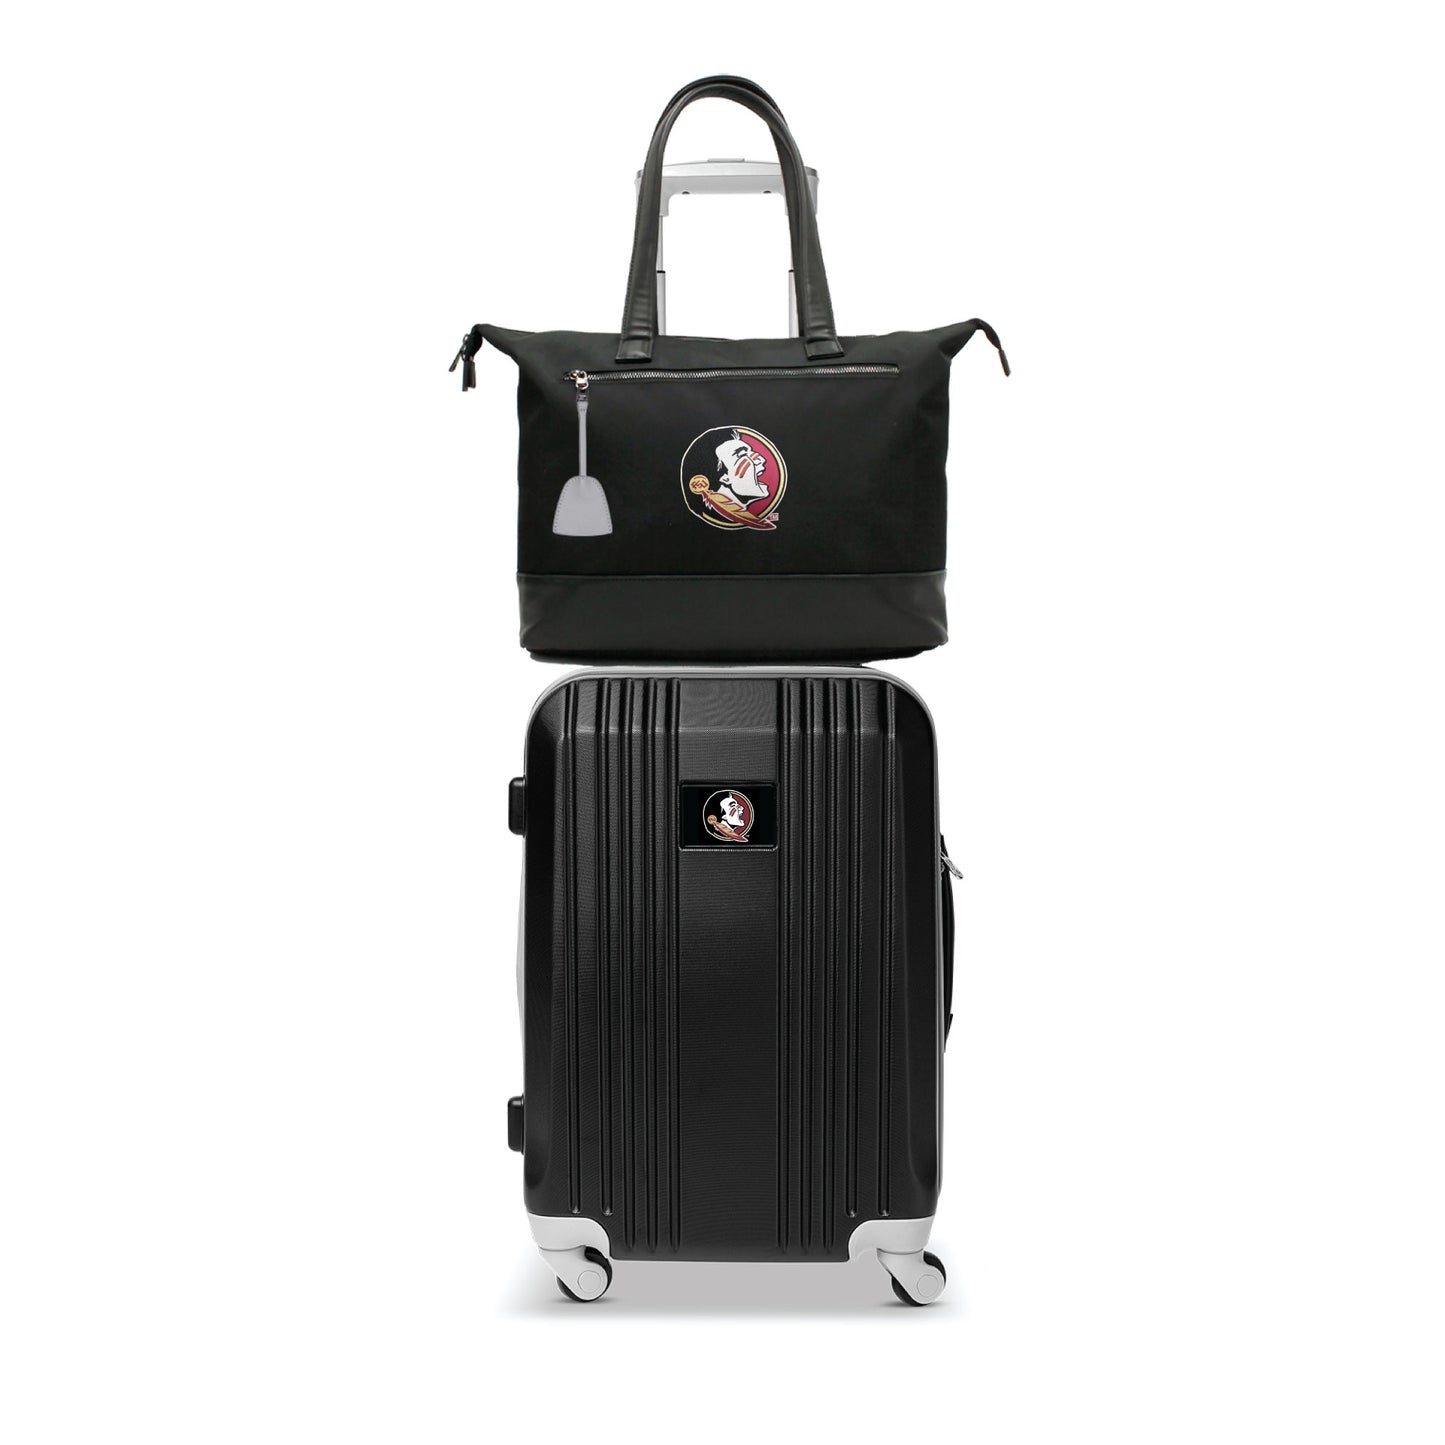 Florida State Seminoles Premium Laptop Tote Bag and Luggage Set